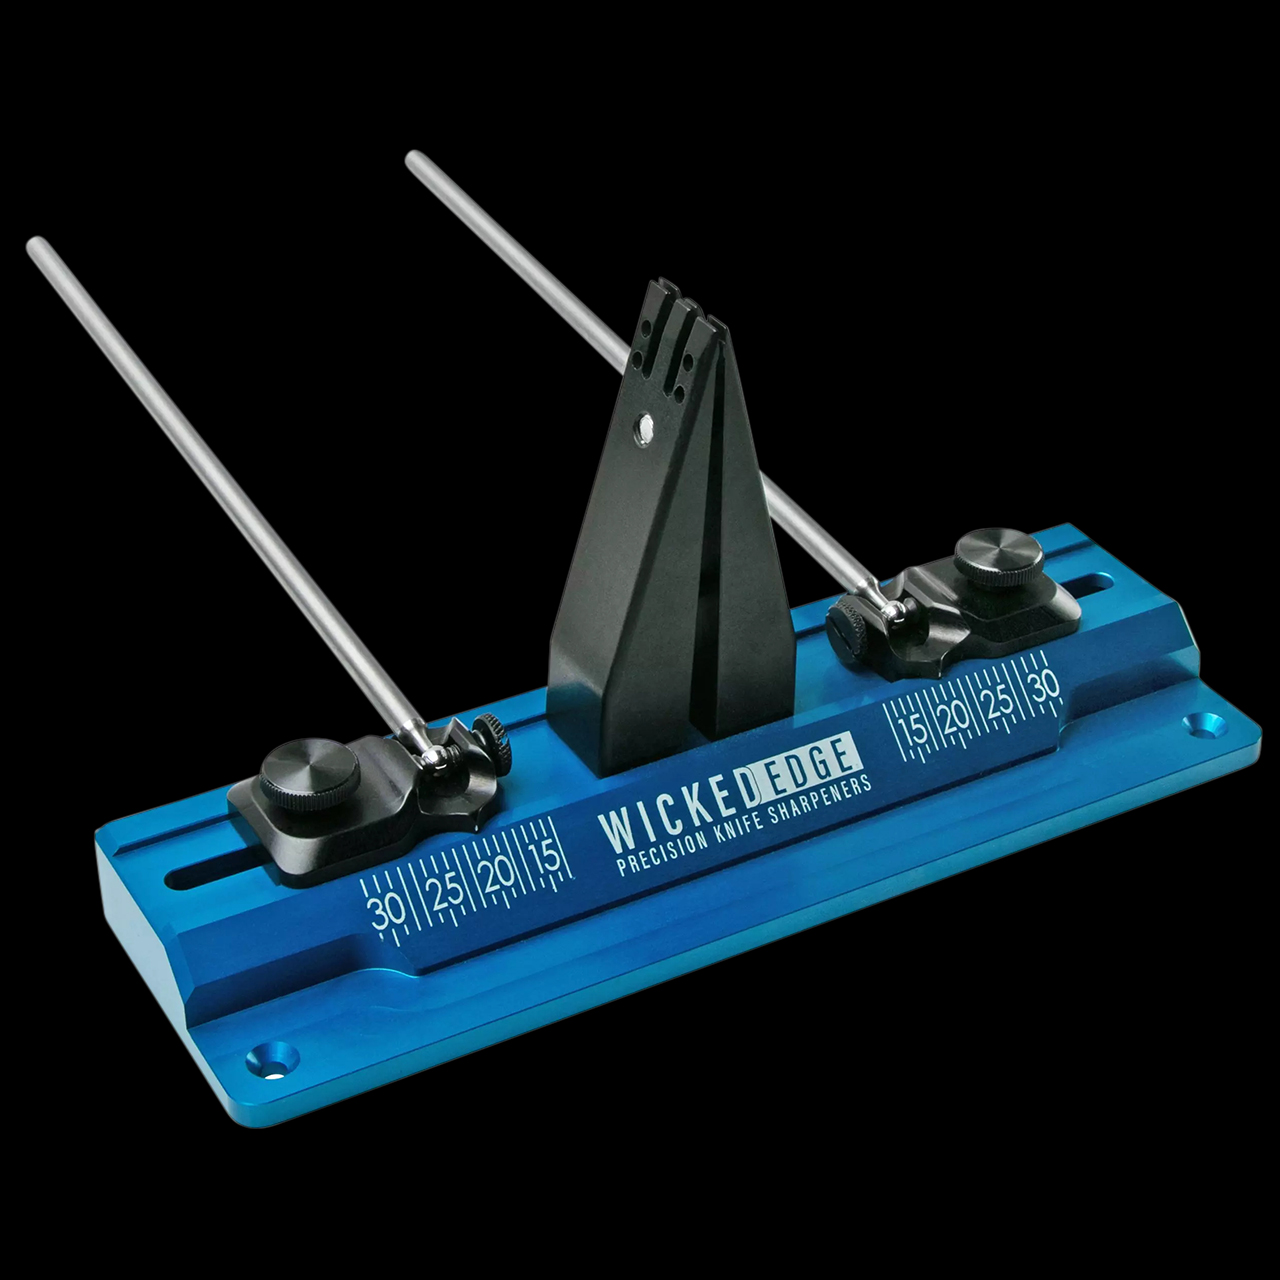 Wicked Edge GO Precision Sharpener WE60 sharpening system